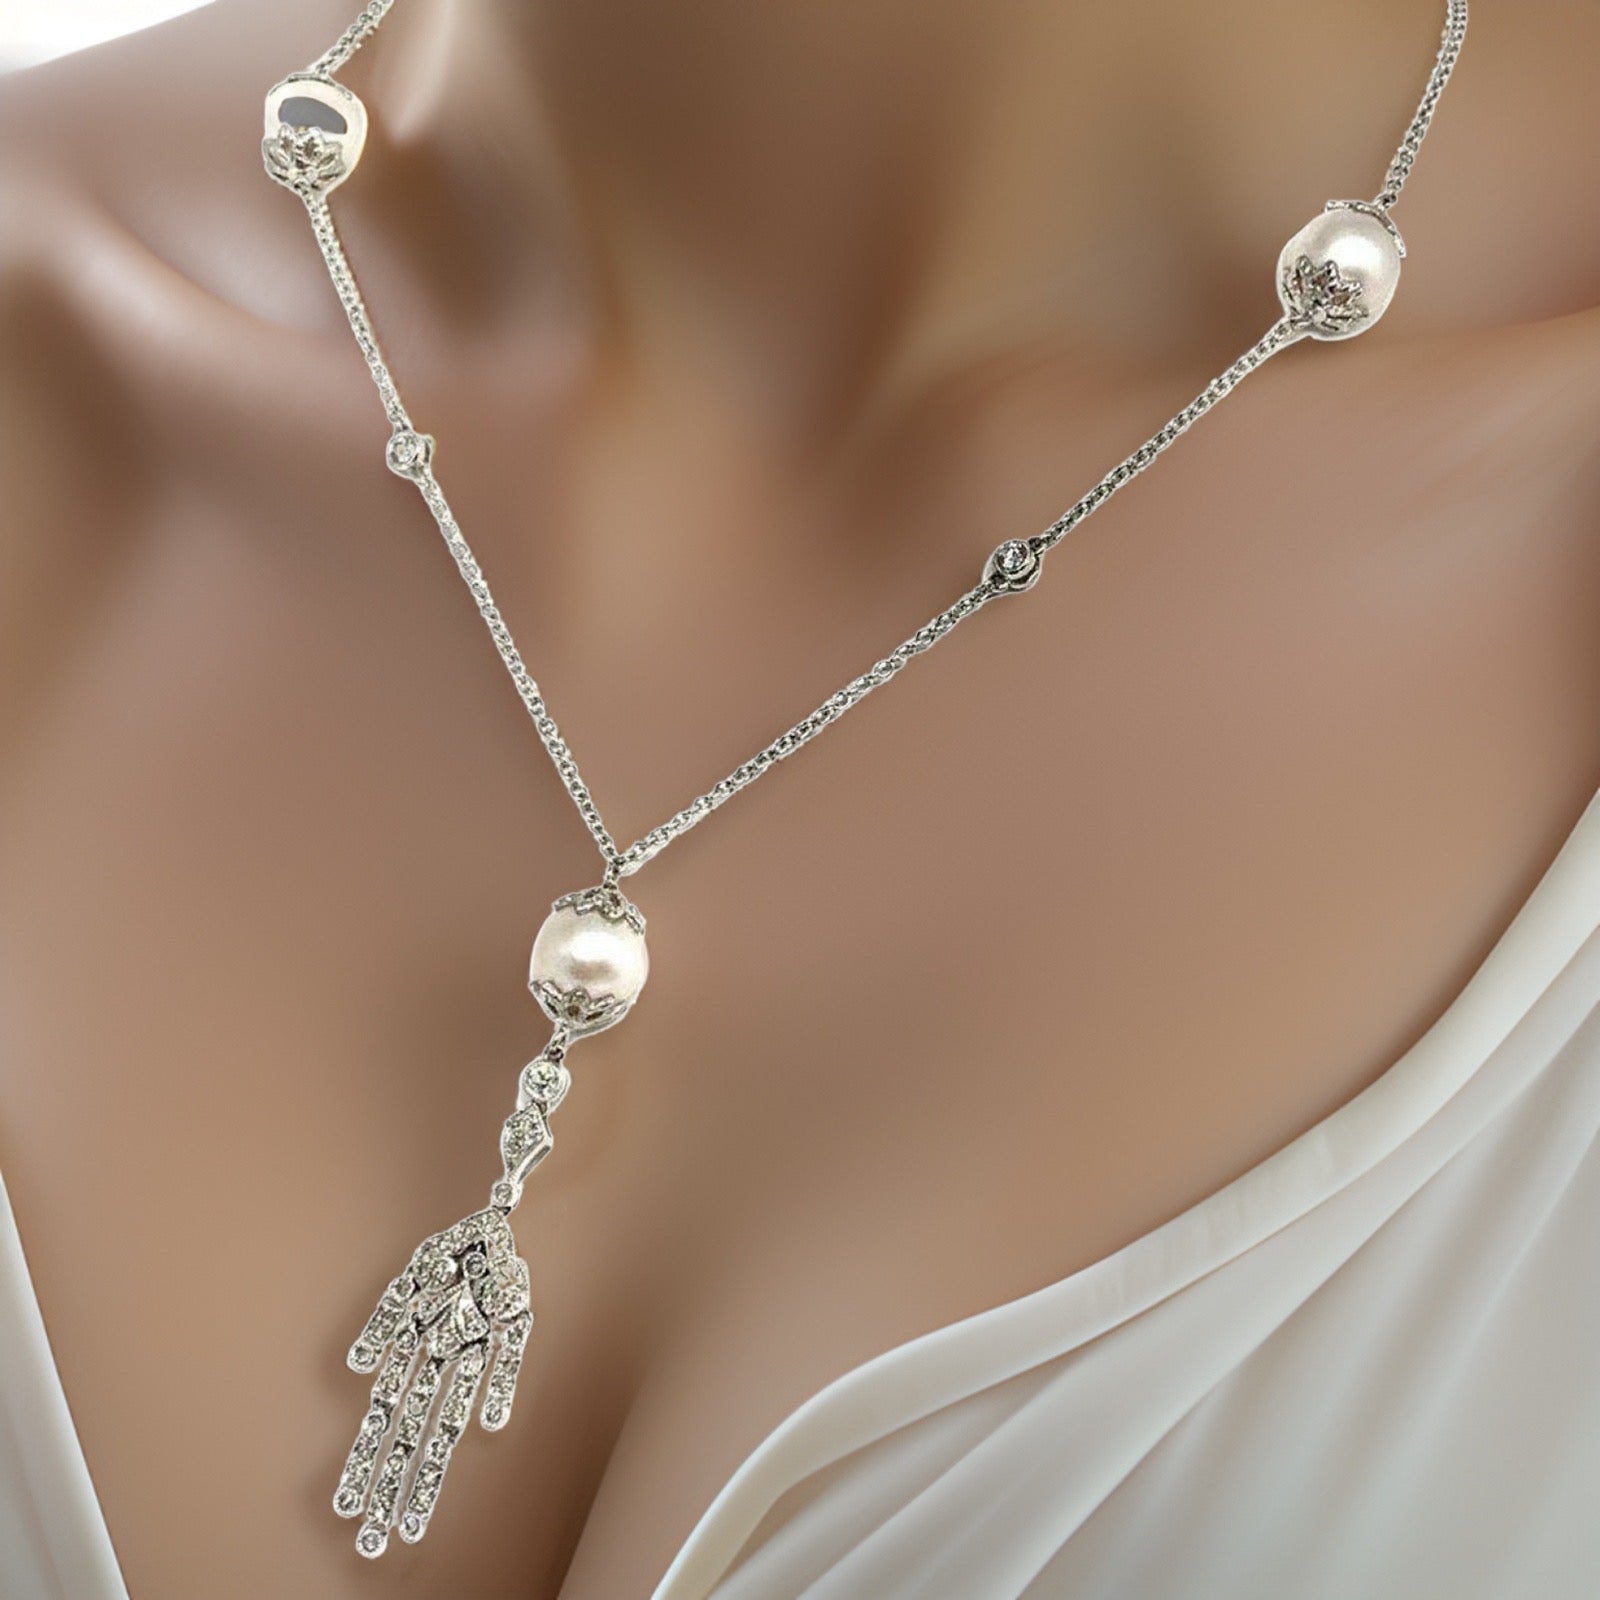 South Sea Pearl Drop Necklace 14k Gold 9.00 mm Pearl Certified $4,250 821050 - Certified Fine Jewelry